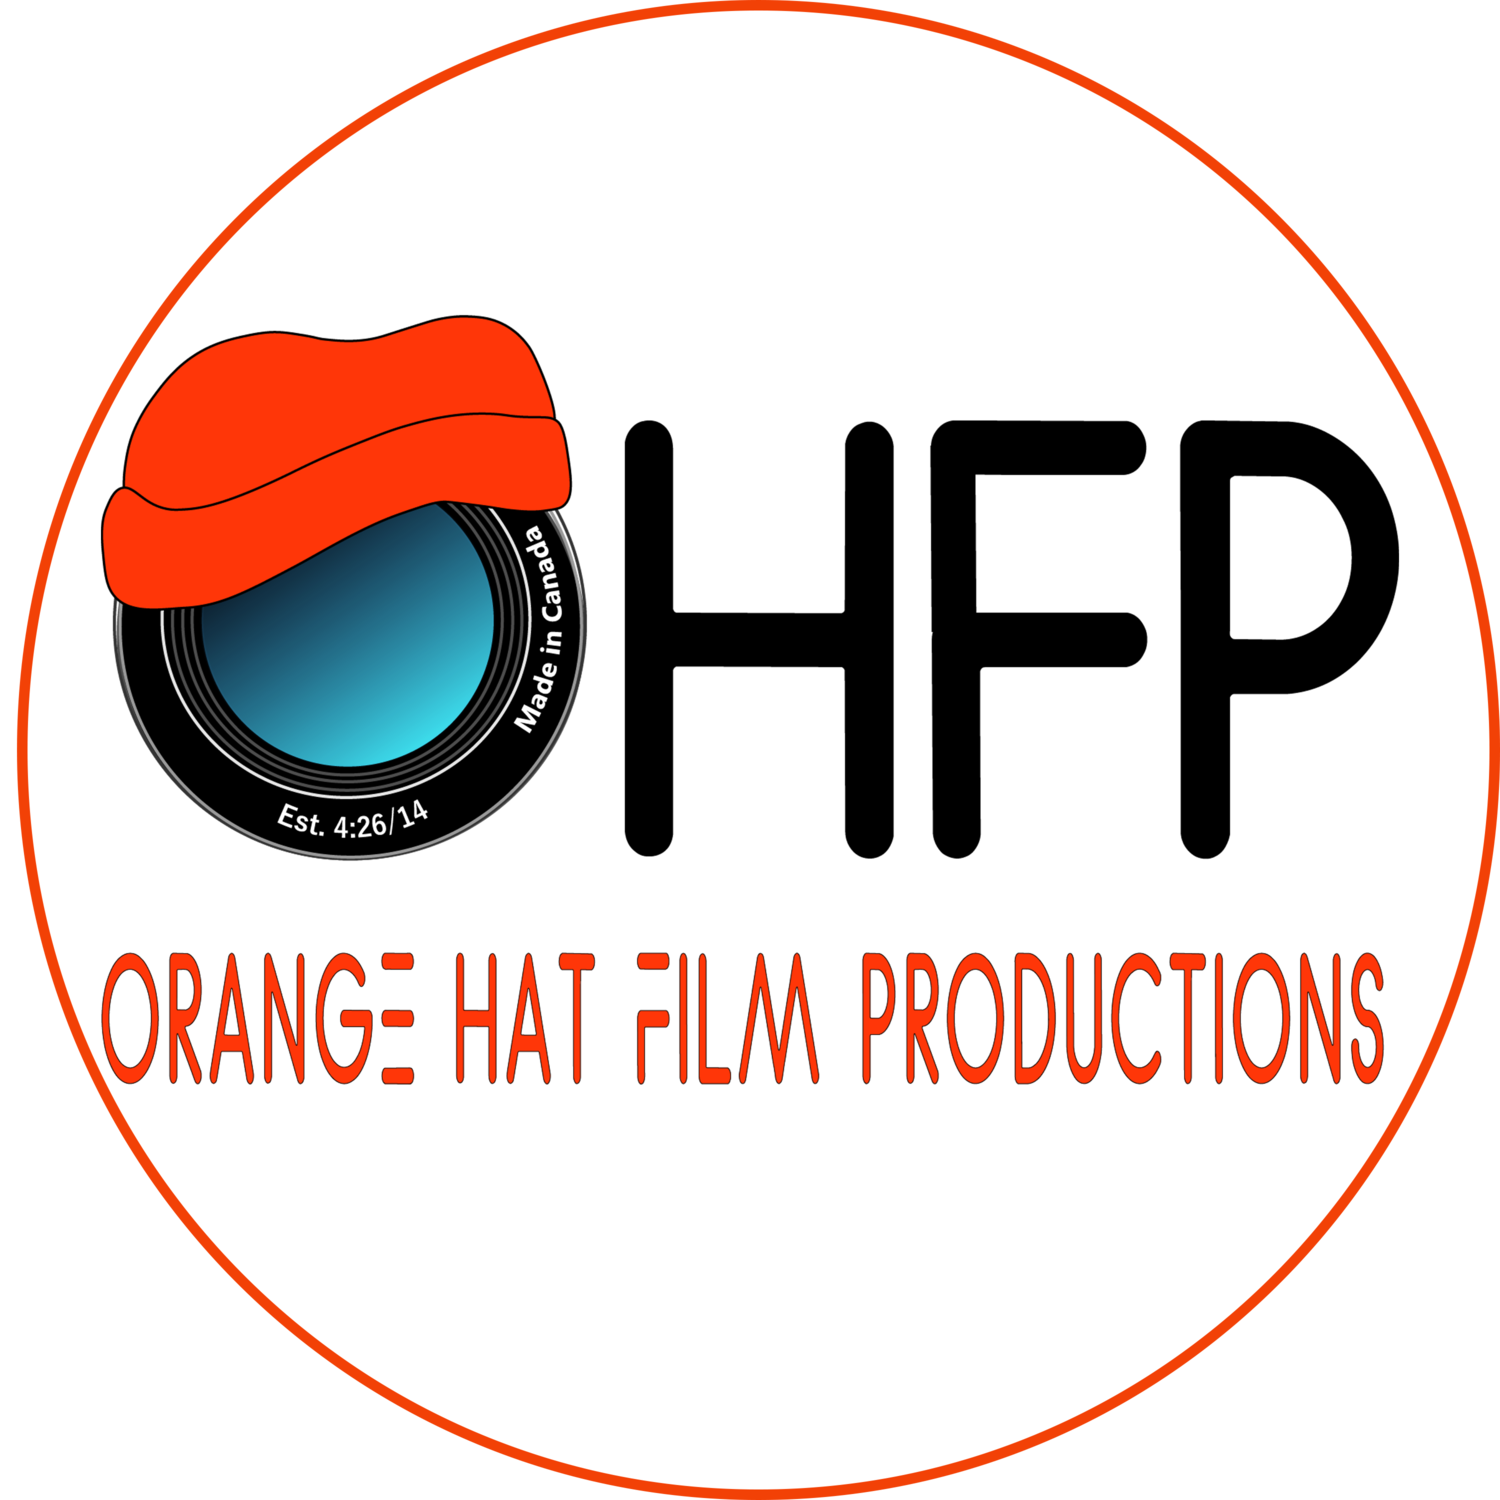 Orange Hat Film Productions - OHFP